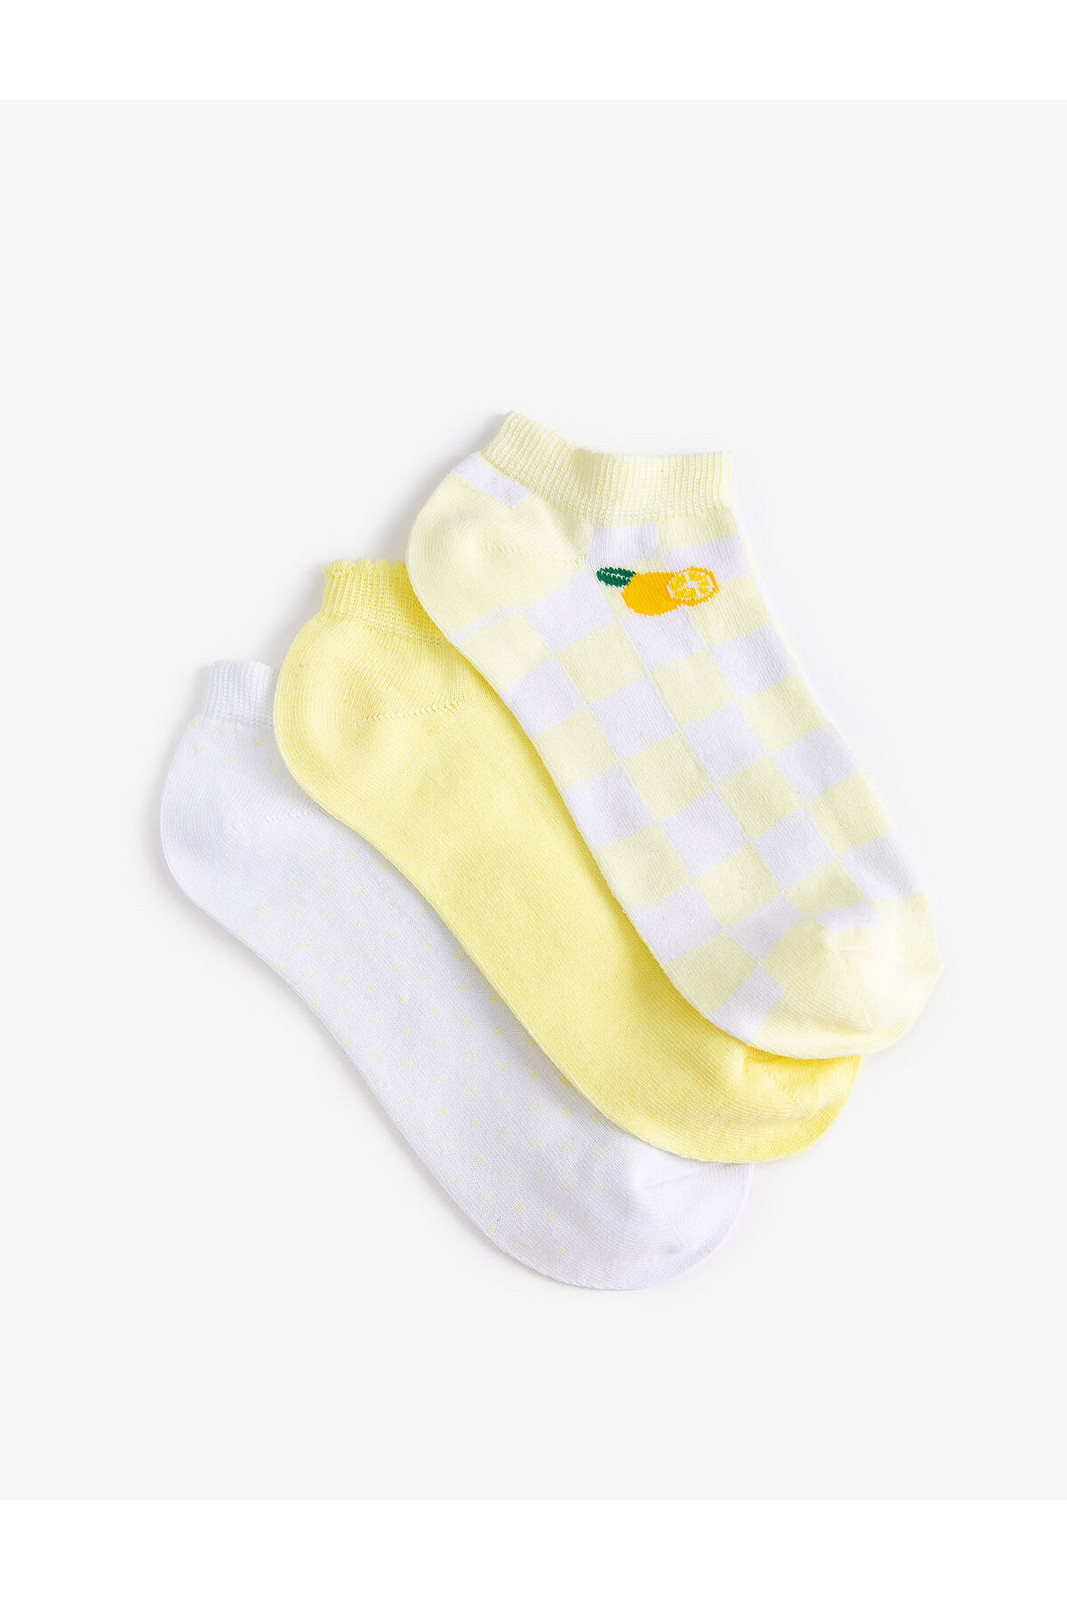 Koton 3-Piece Booties Socks Set Fruit Patterned Multi Color